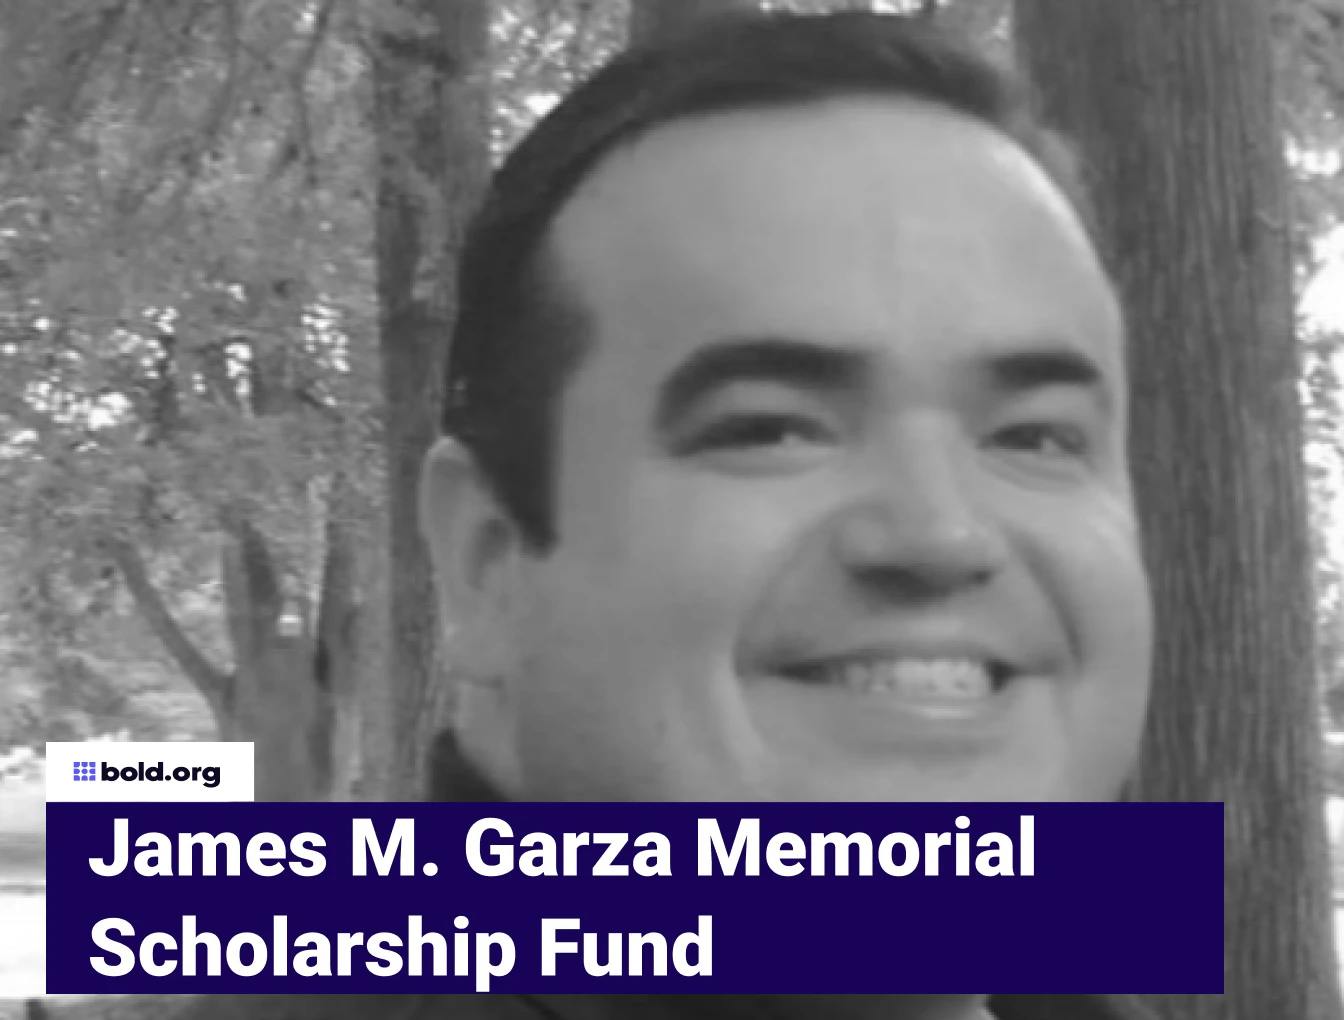 James M. Garza Memorial Scholarship Fund